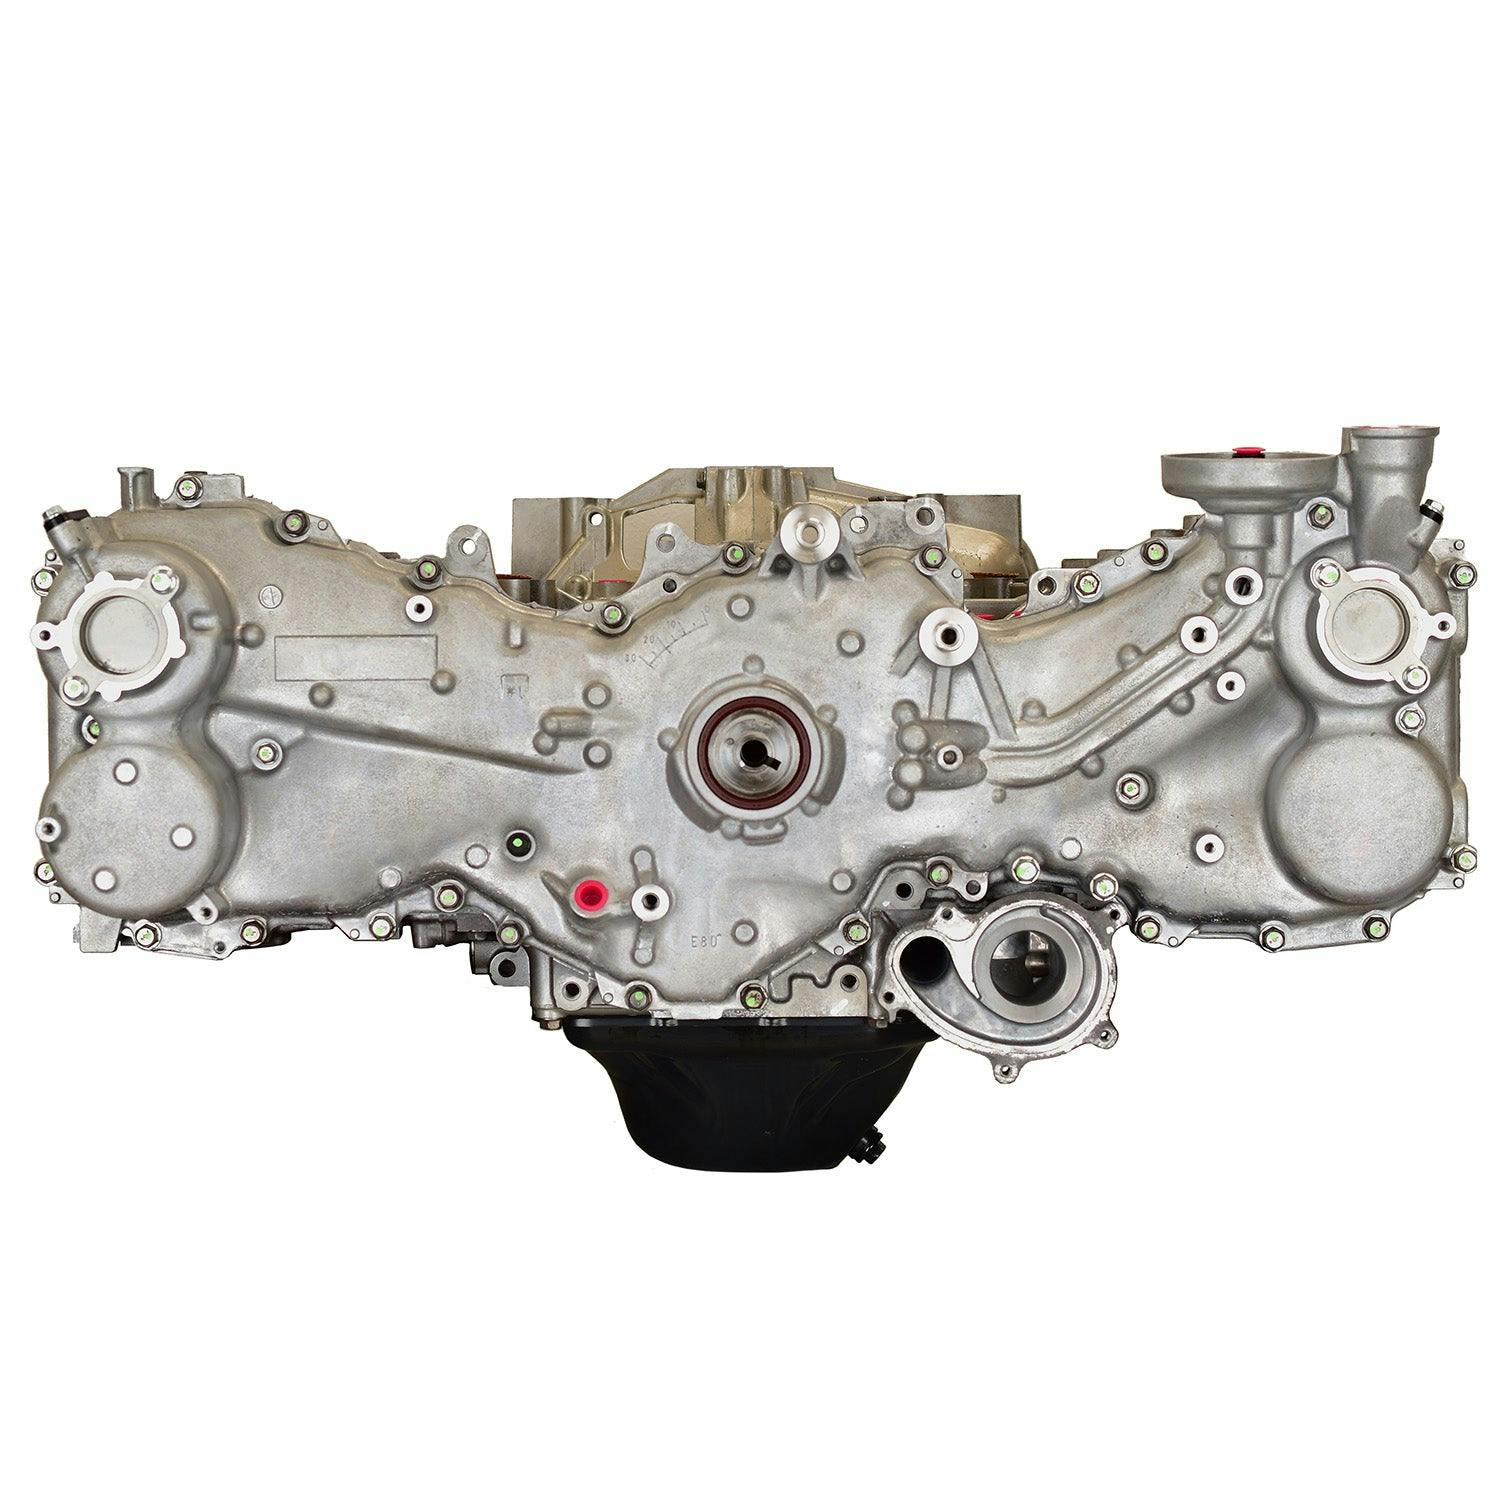 2.5L Flat-4 Engine for 2013-2014 Subaru Legacy/Outback